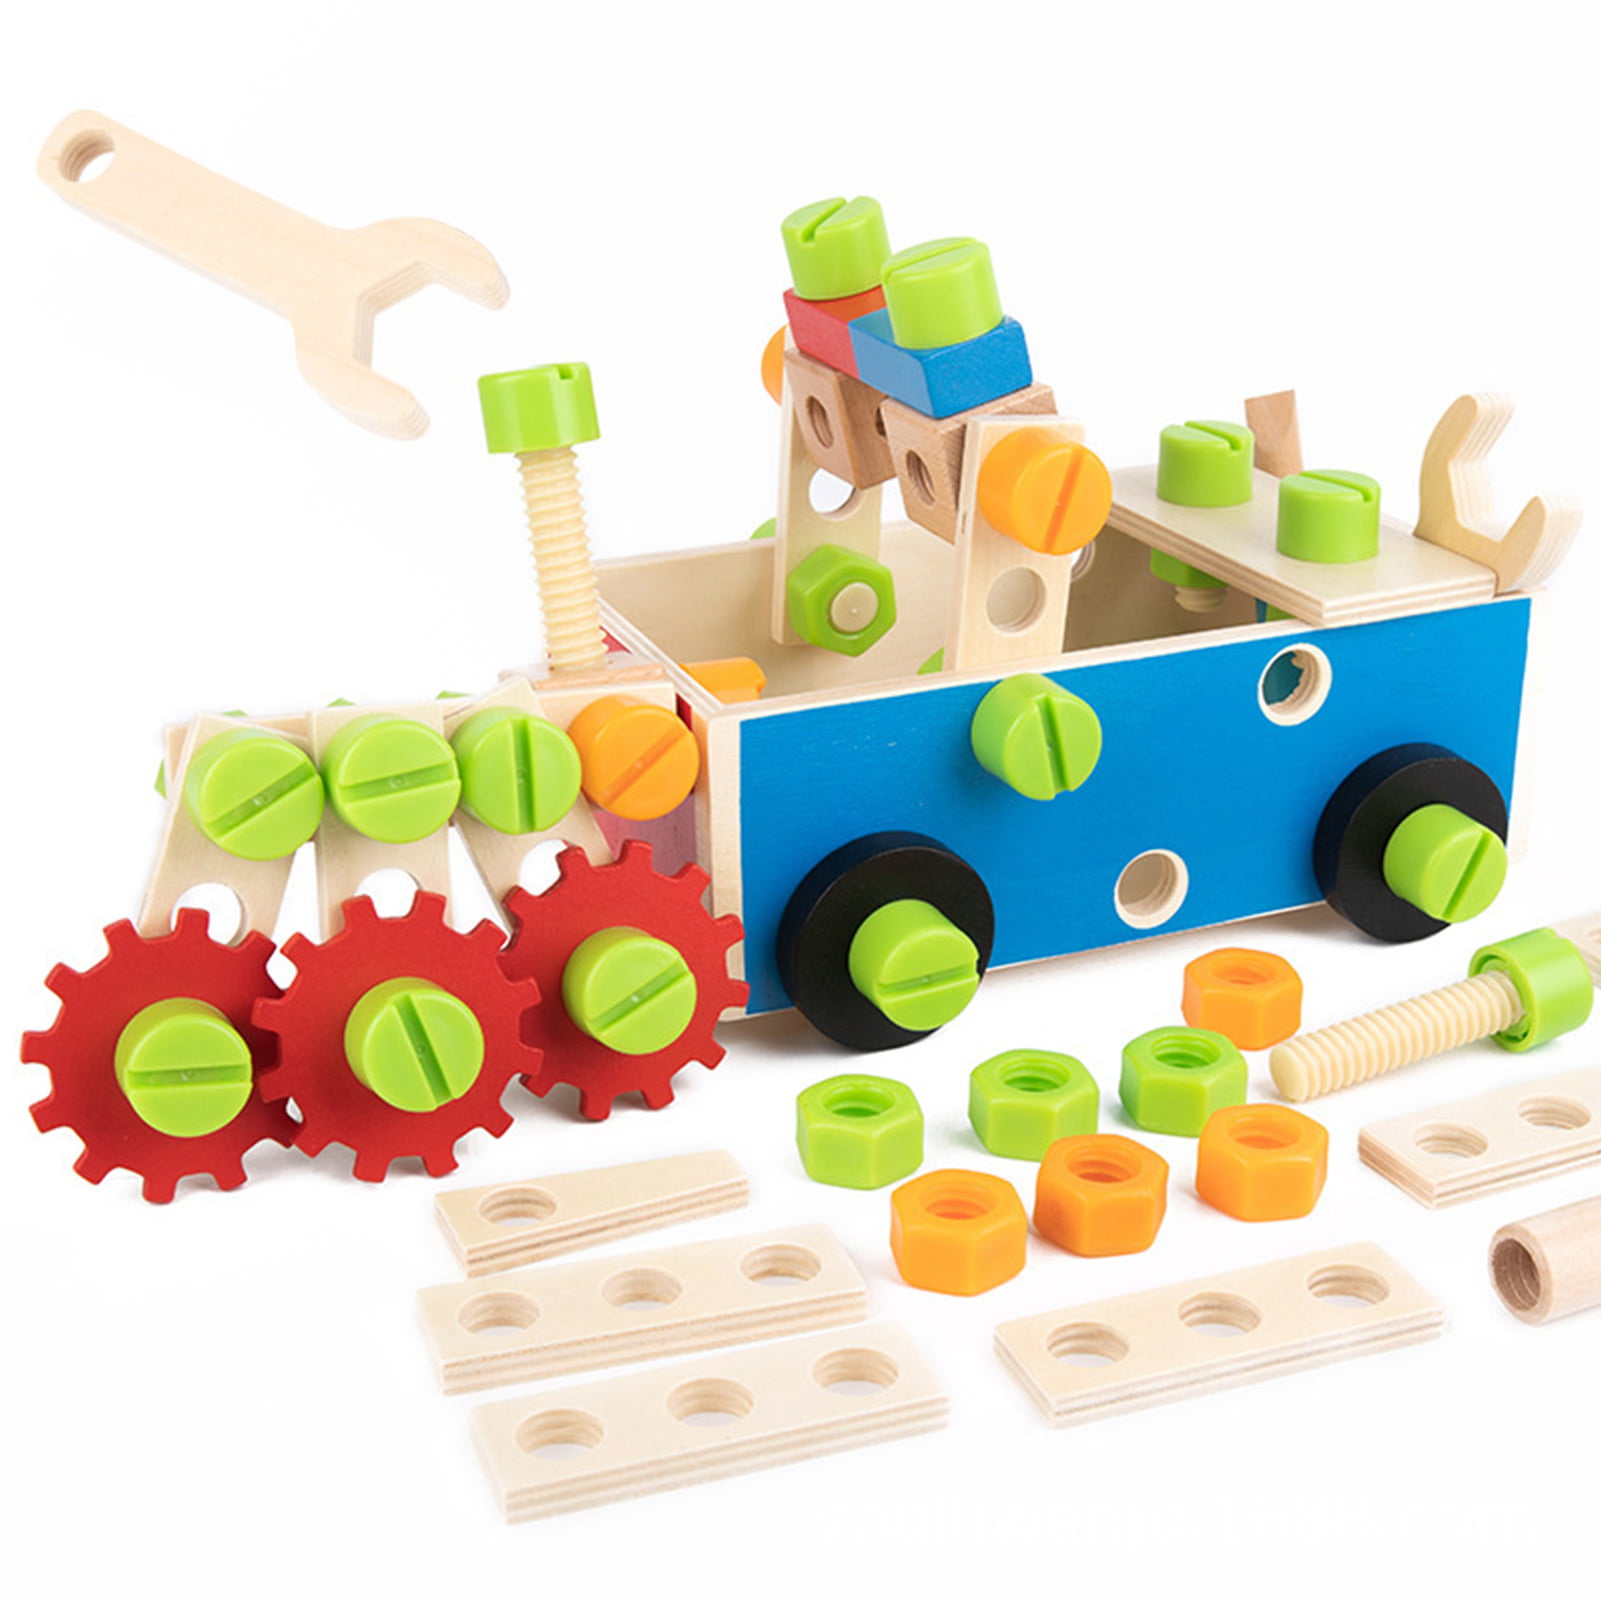 Kids Building Blocks Car Set Block Construction Toys Game DIY Gift Xmas 3 Sizes 